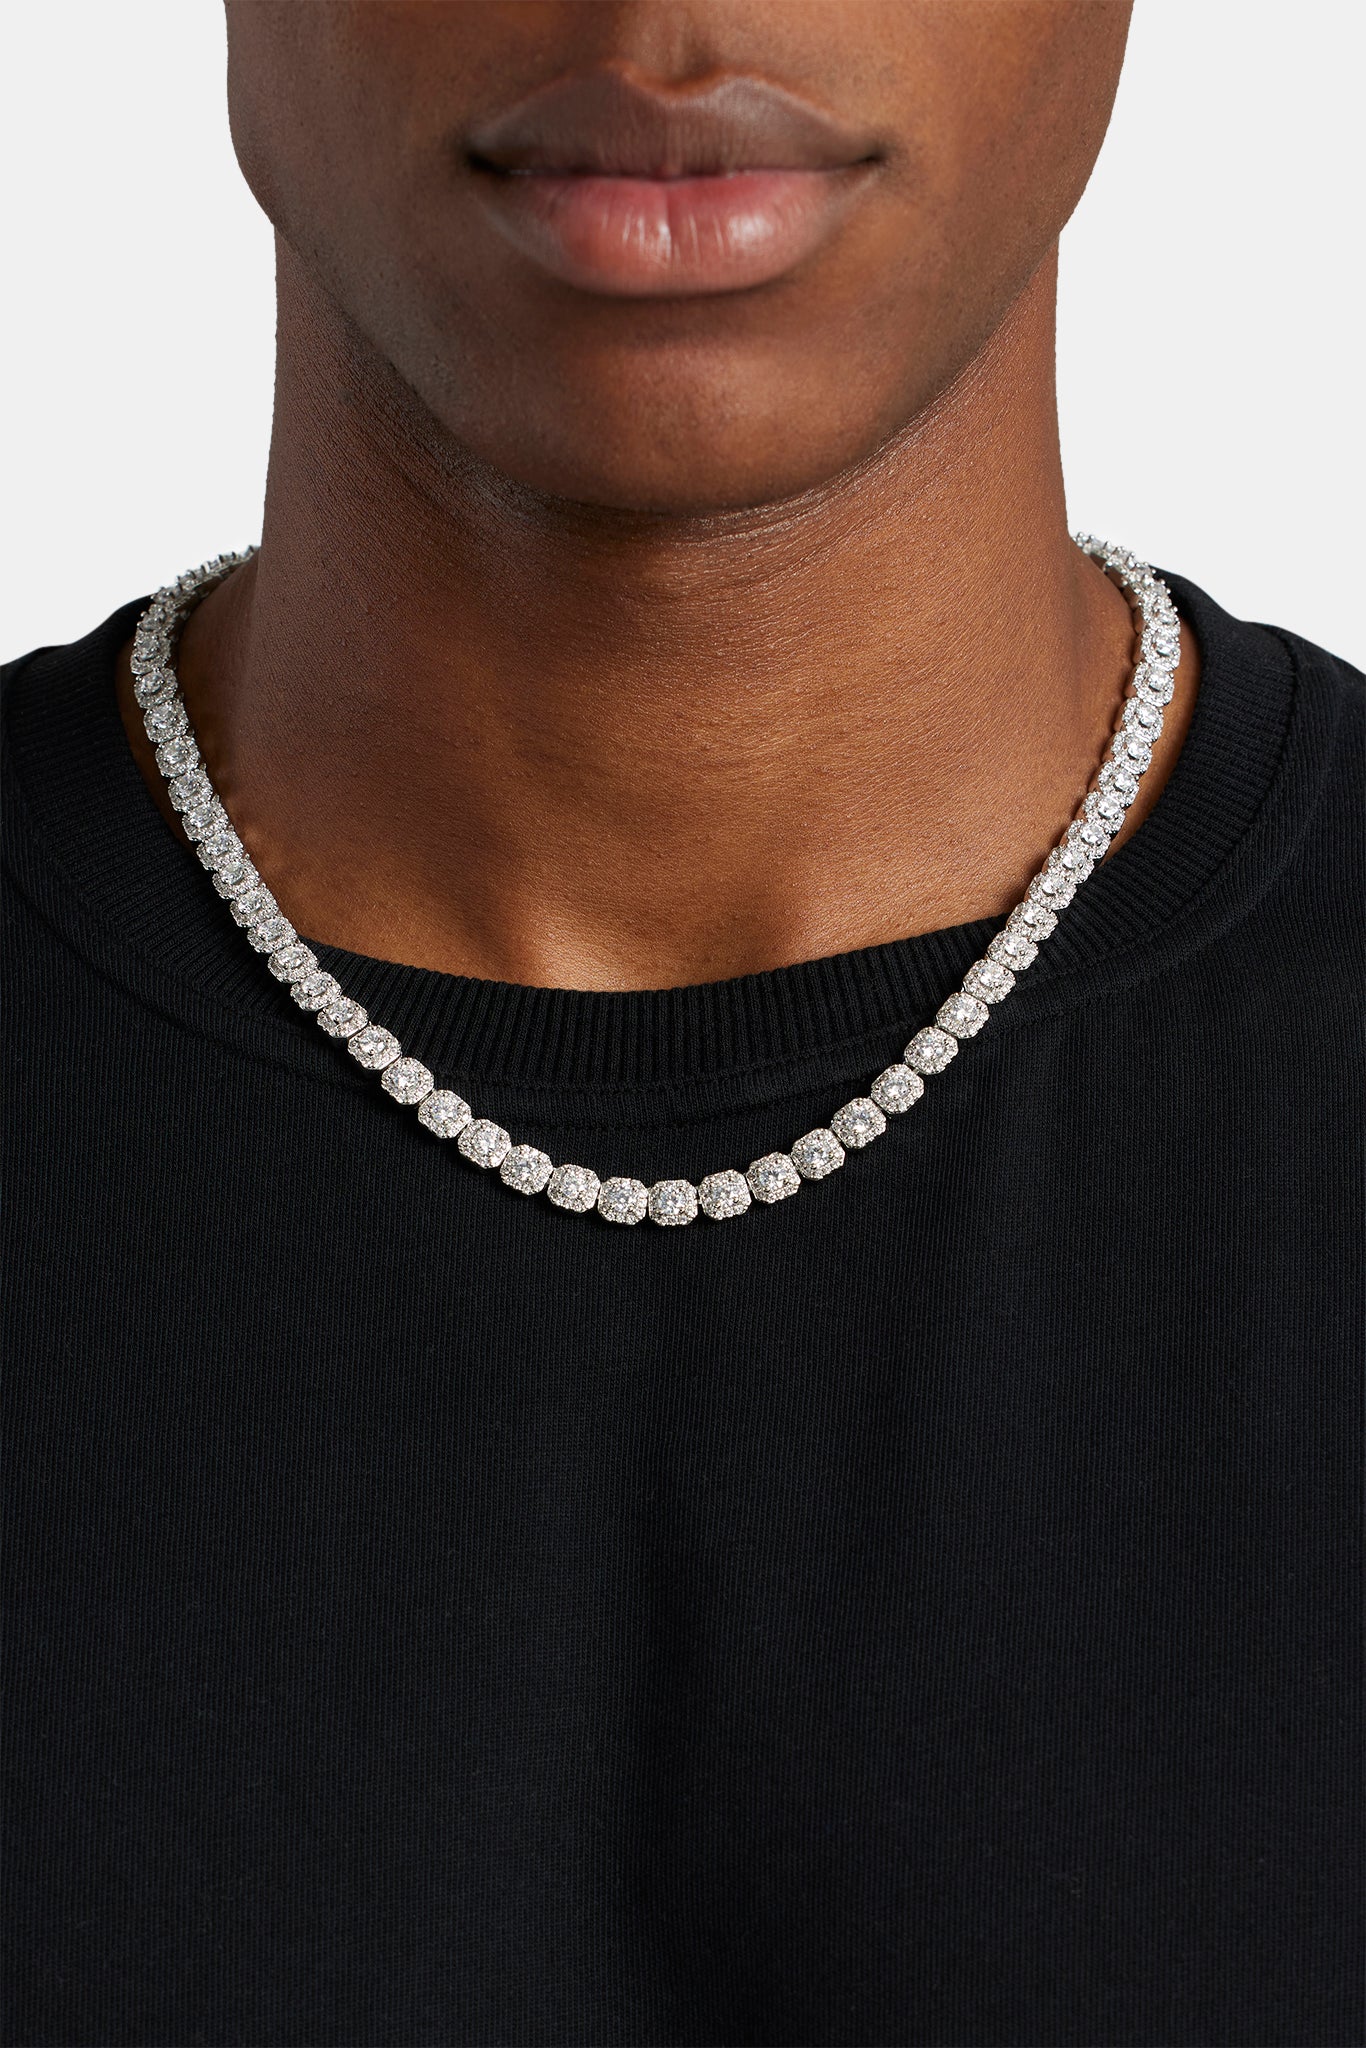 Natural Round Diamond Flower Cluster Tennis Necklace 14K White Gold 18.40Ct  | eBay